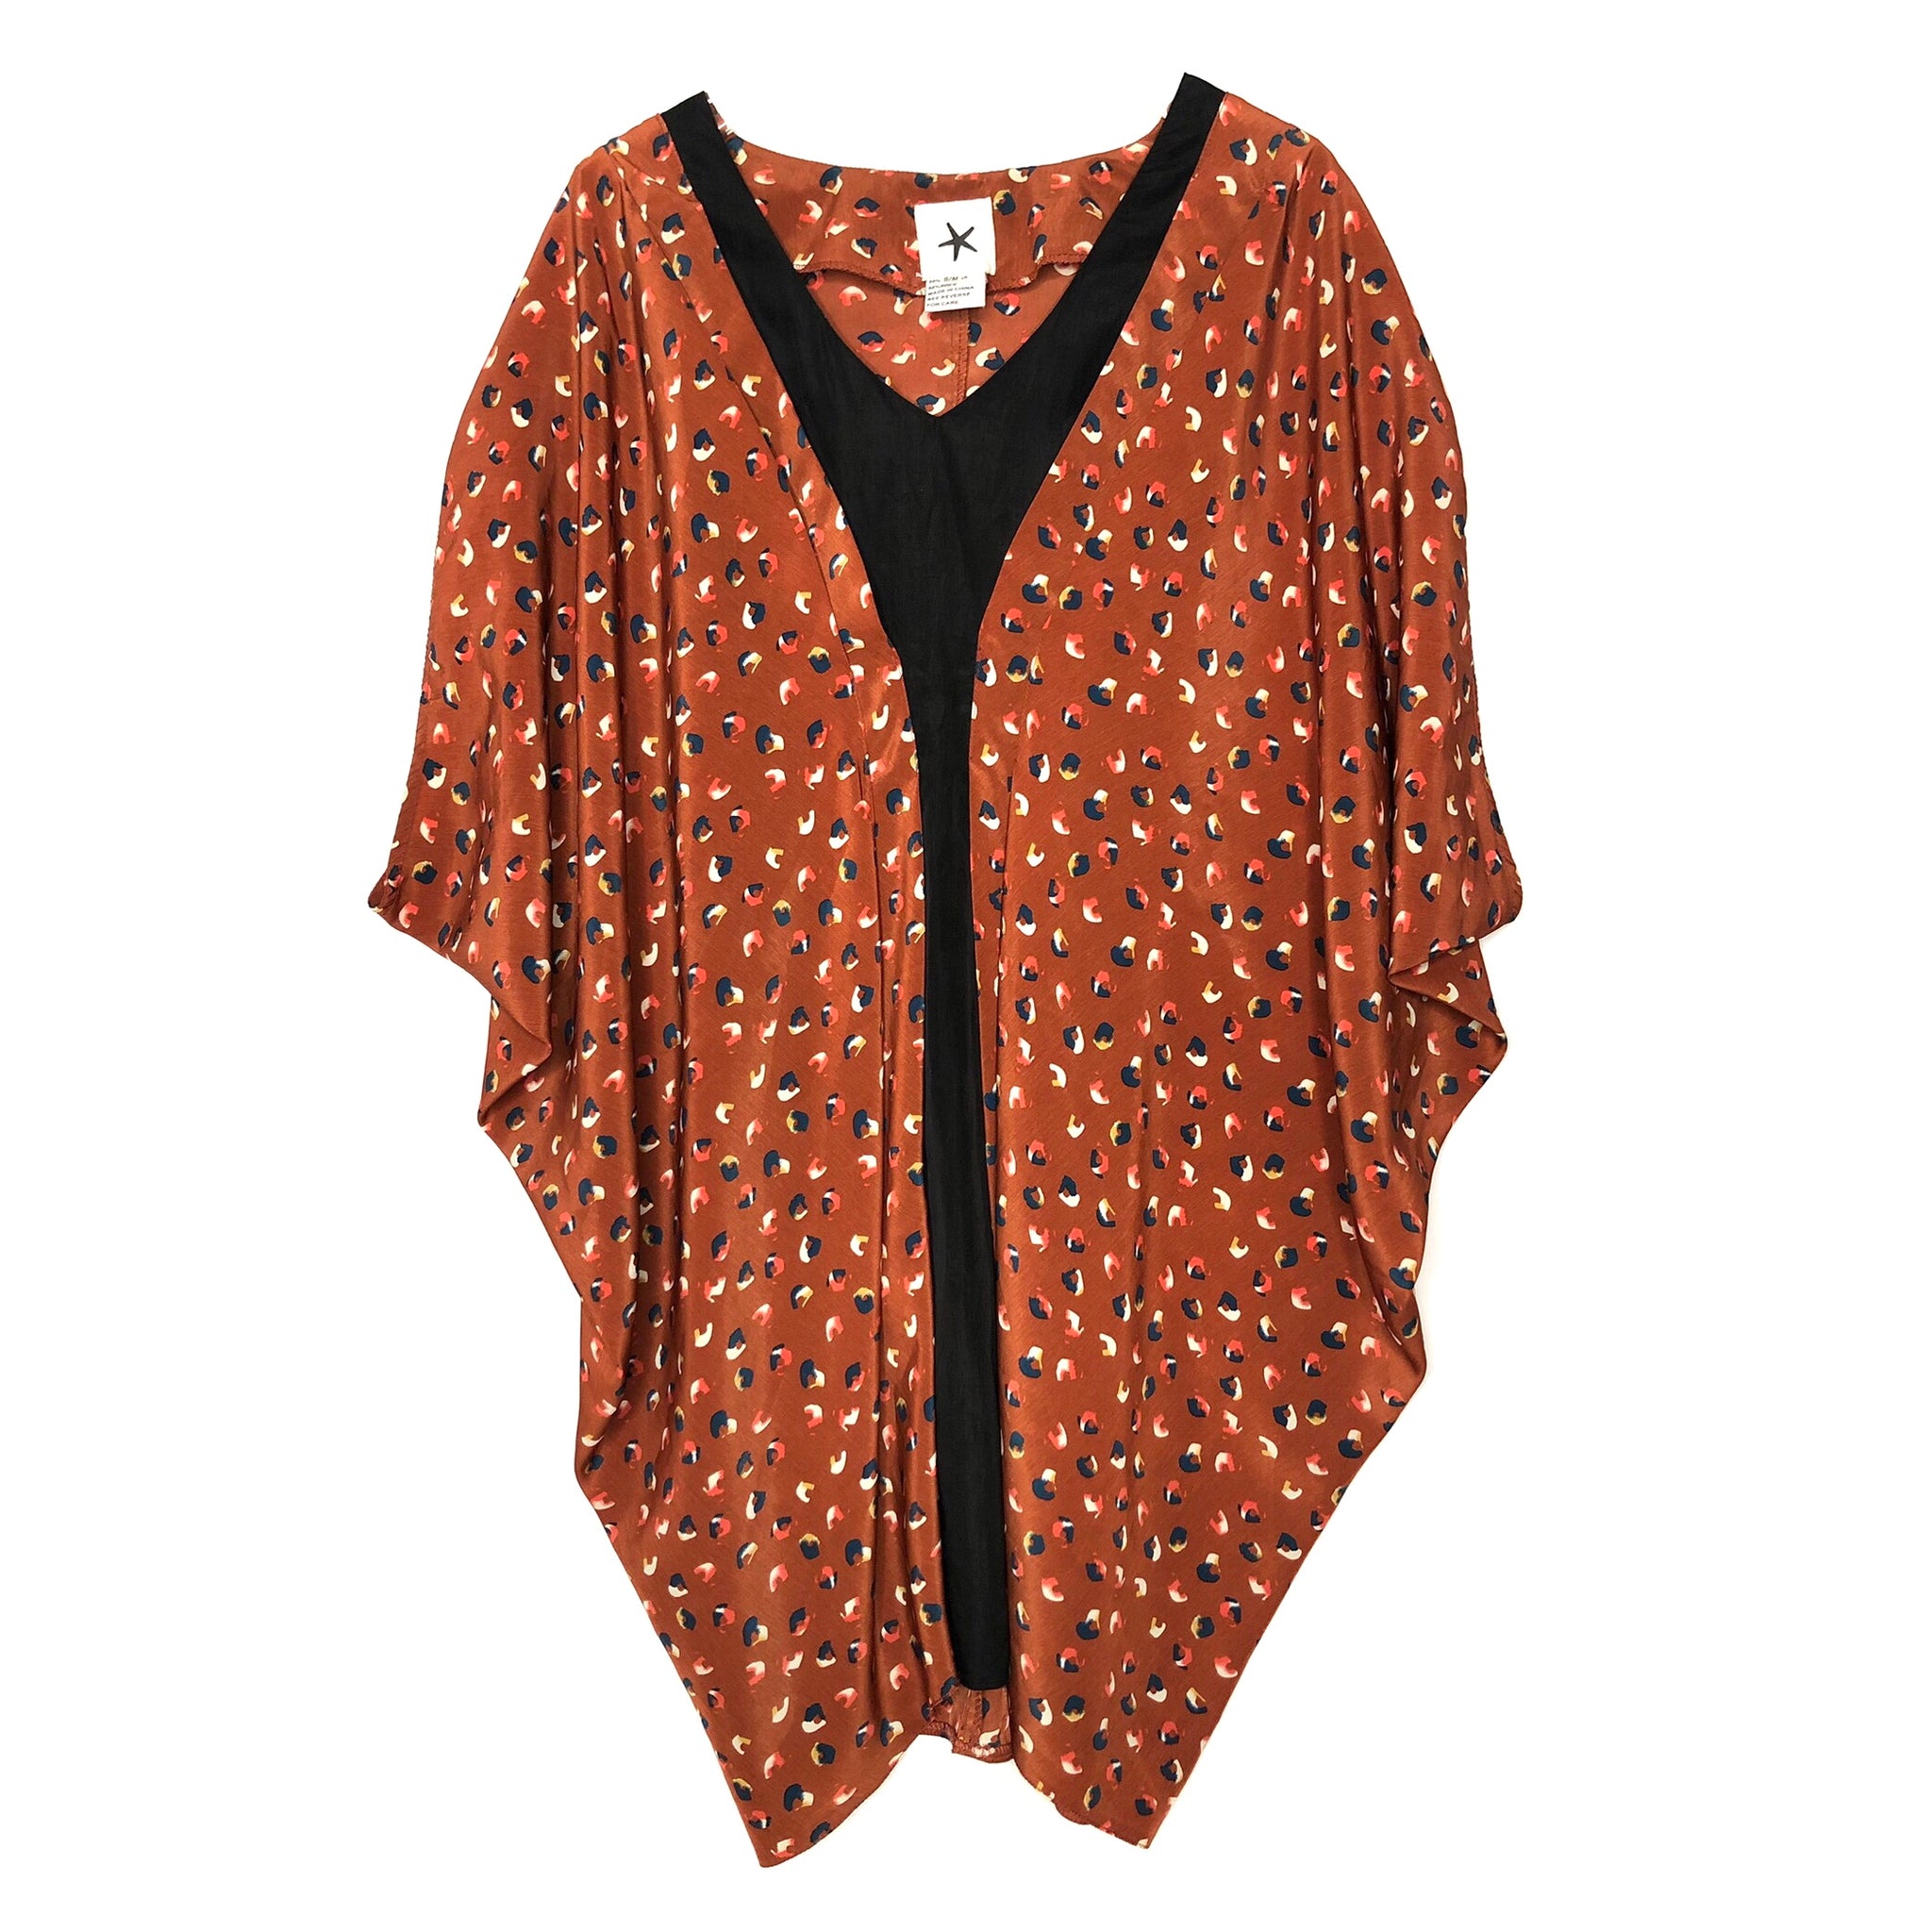 Anthropologie Aoyama Itchome Bohemian Abstract Dot Print Short Sleeve Caftan Tunic Dress